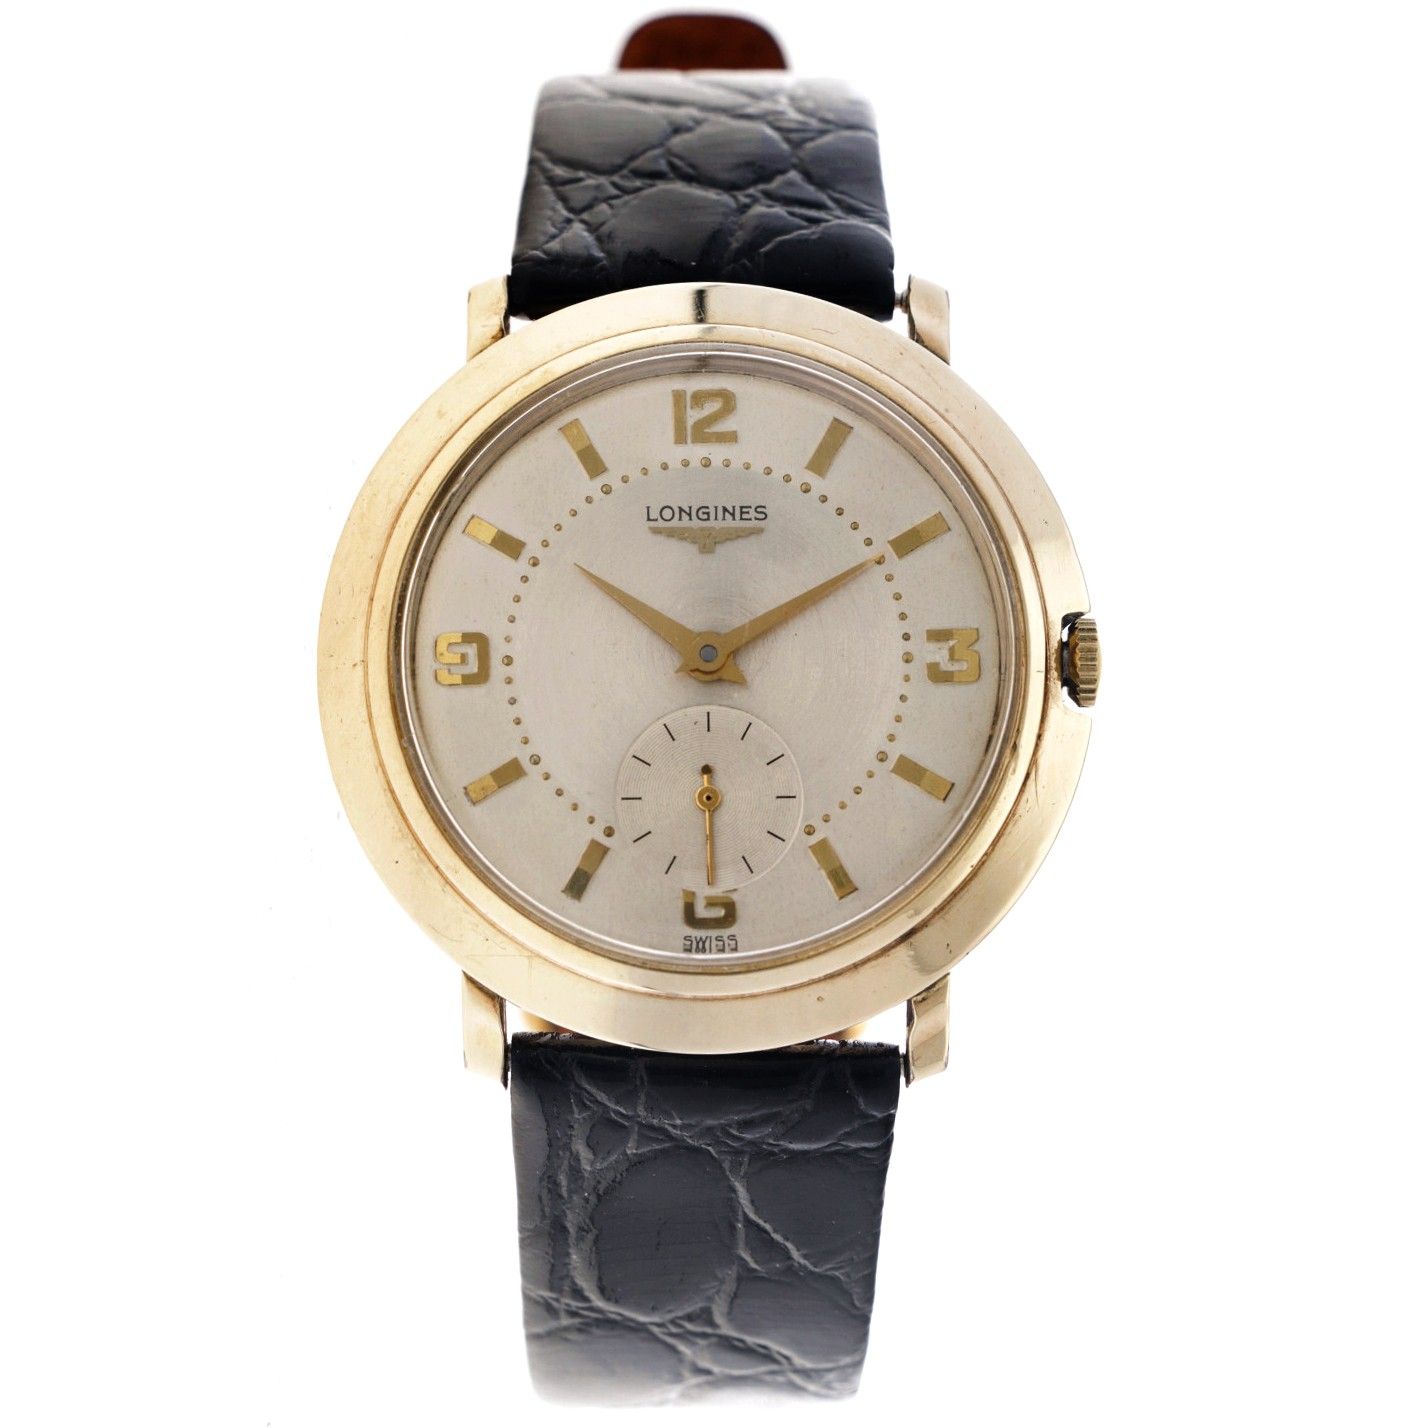 Longines Wittnauer dress watch 2423 - Men's watch - approx. 1960. Case: gold fil&hellip;